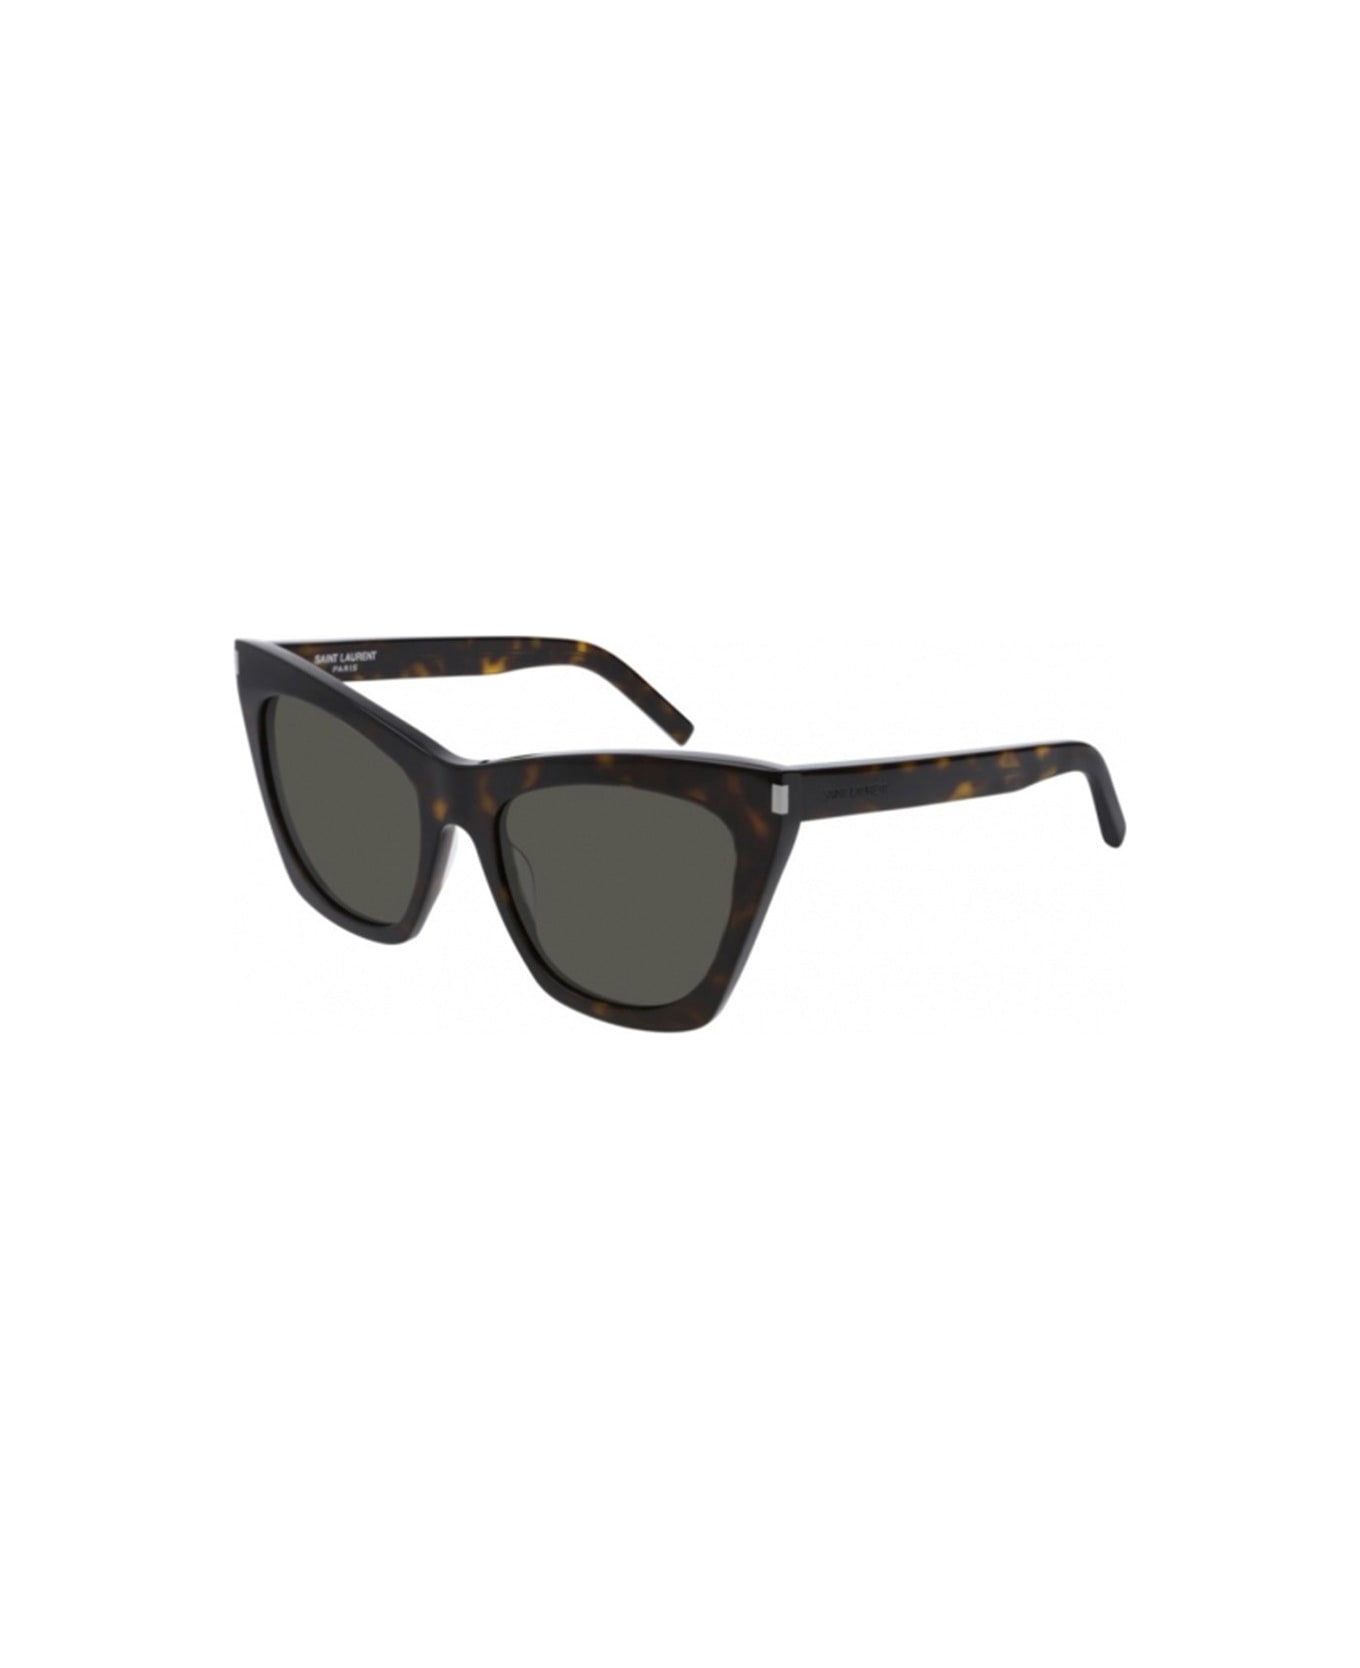 Saint Laurent Eyewear Sunglasses - Marrone tartarugato/Verde